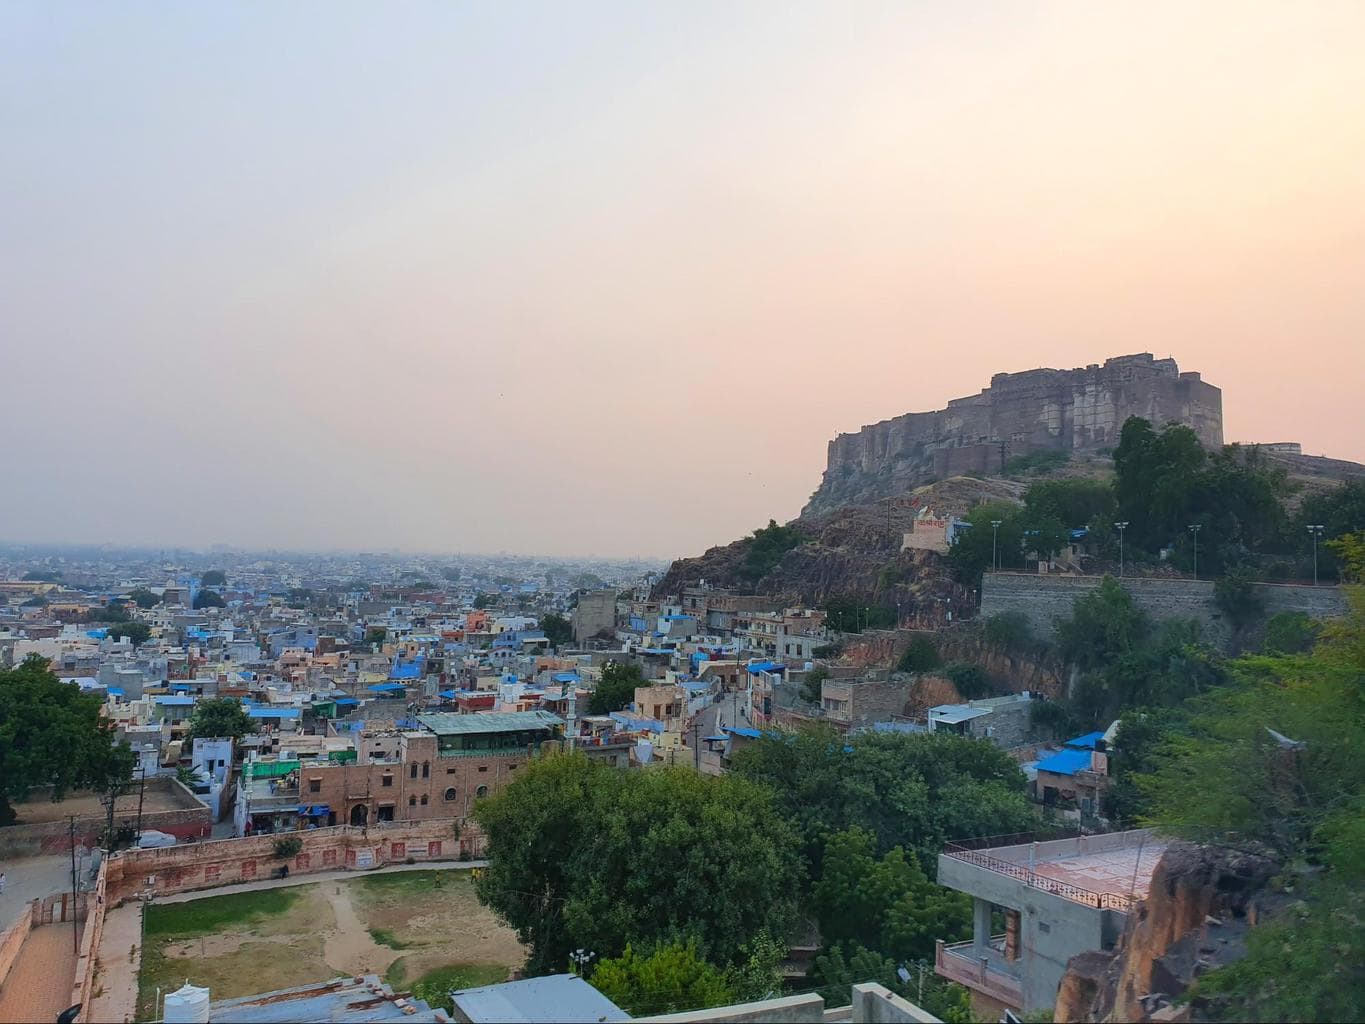 Jodhpur fort and city